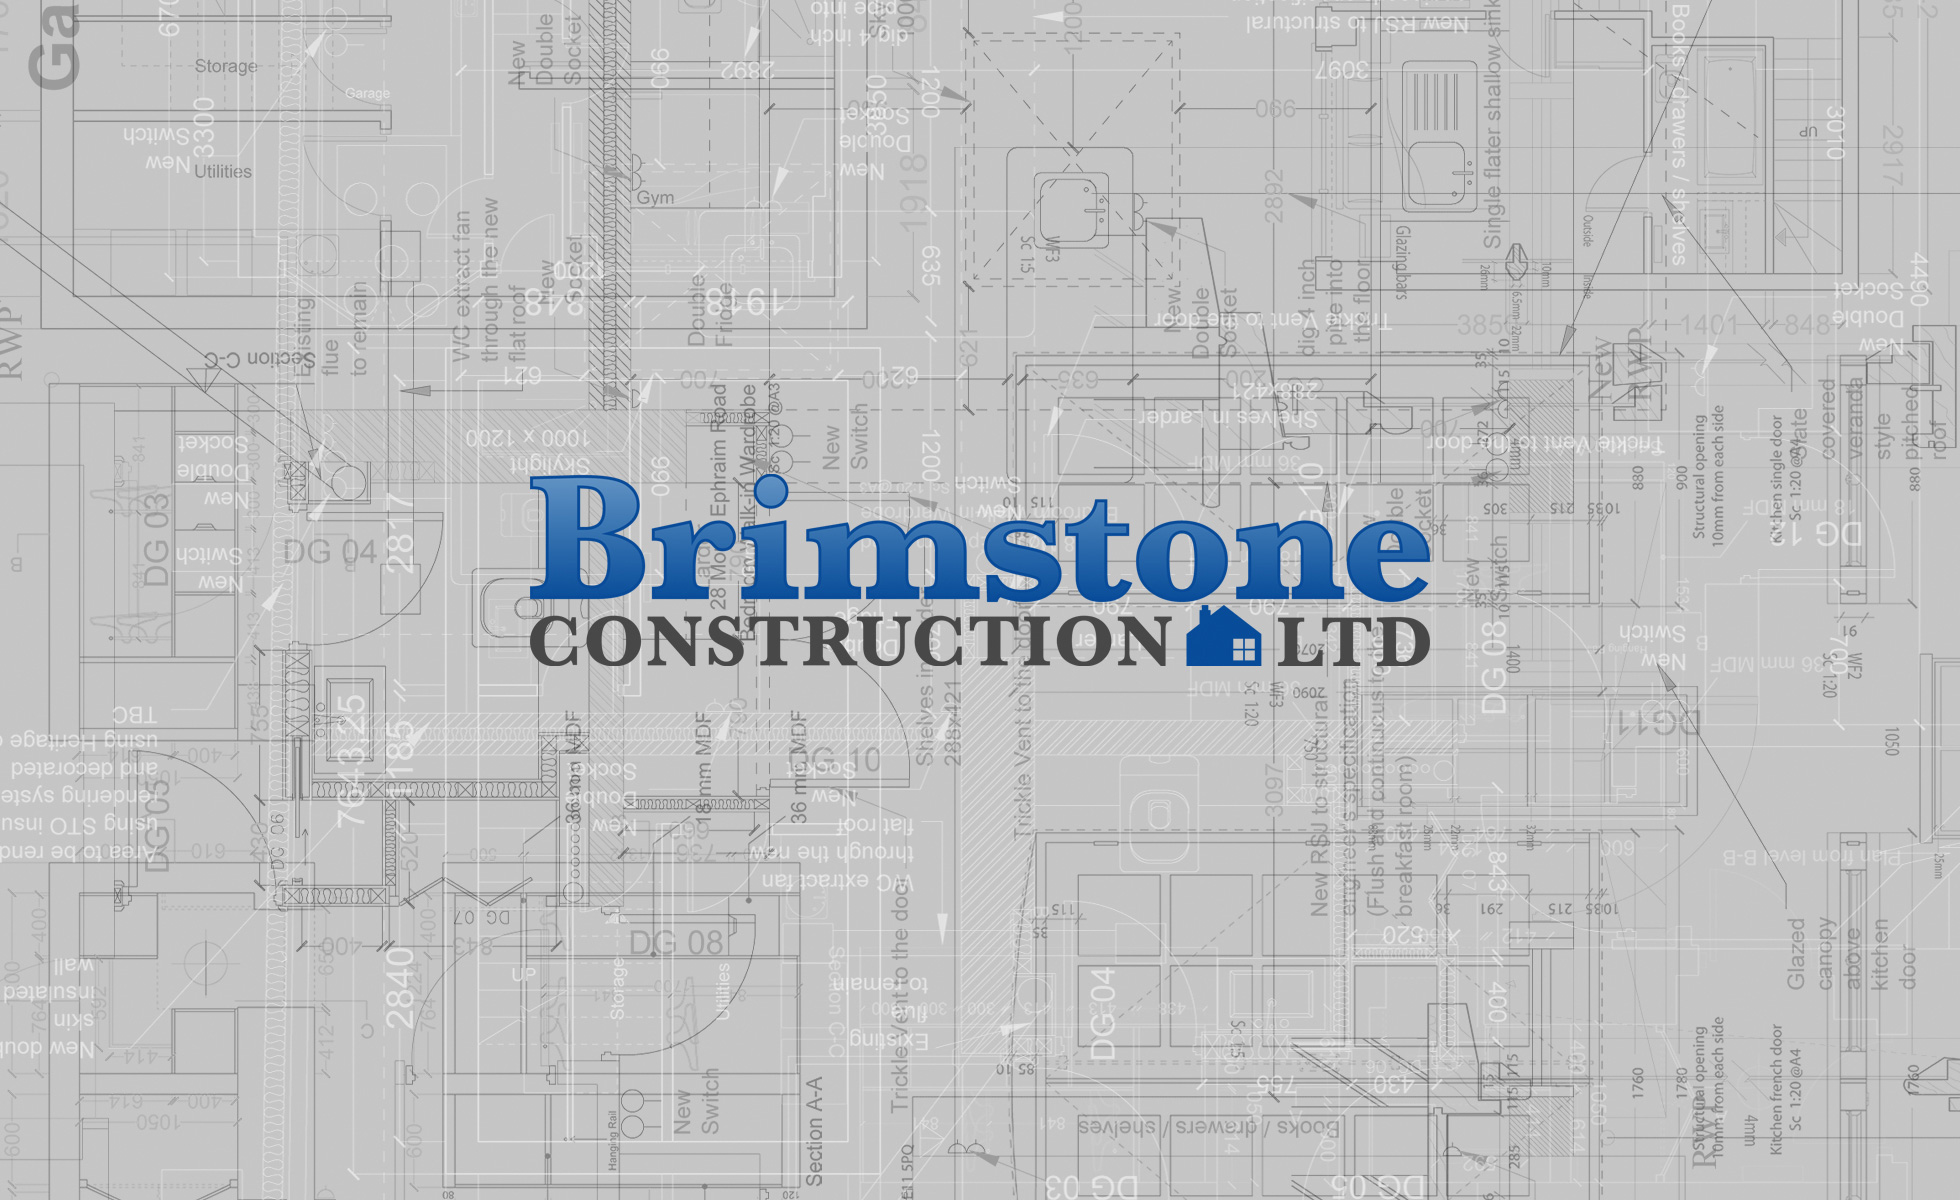 brimstone website image 2